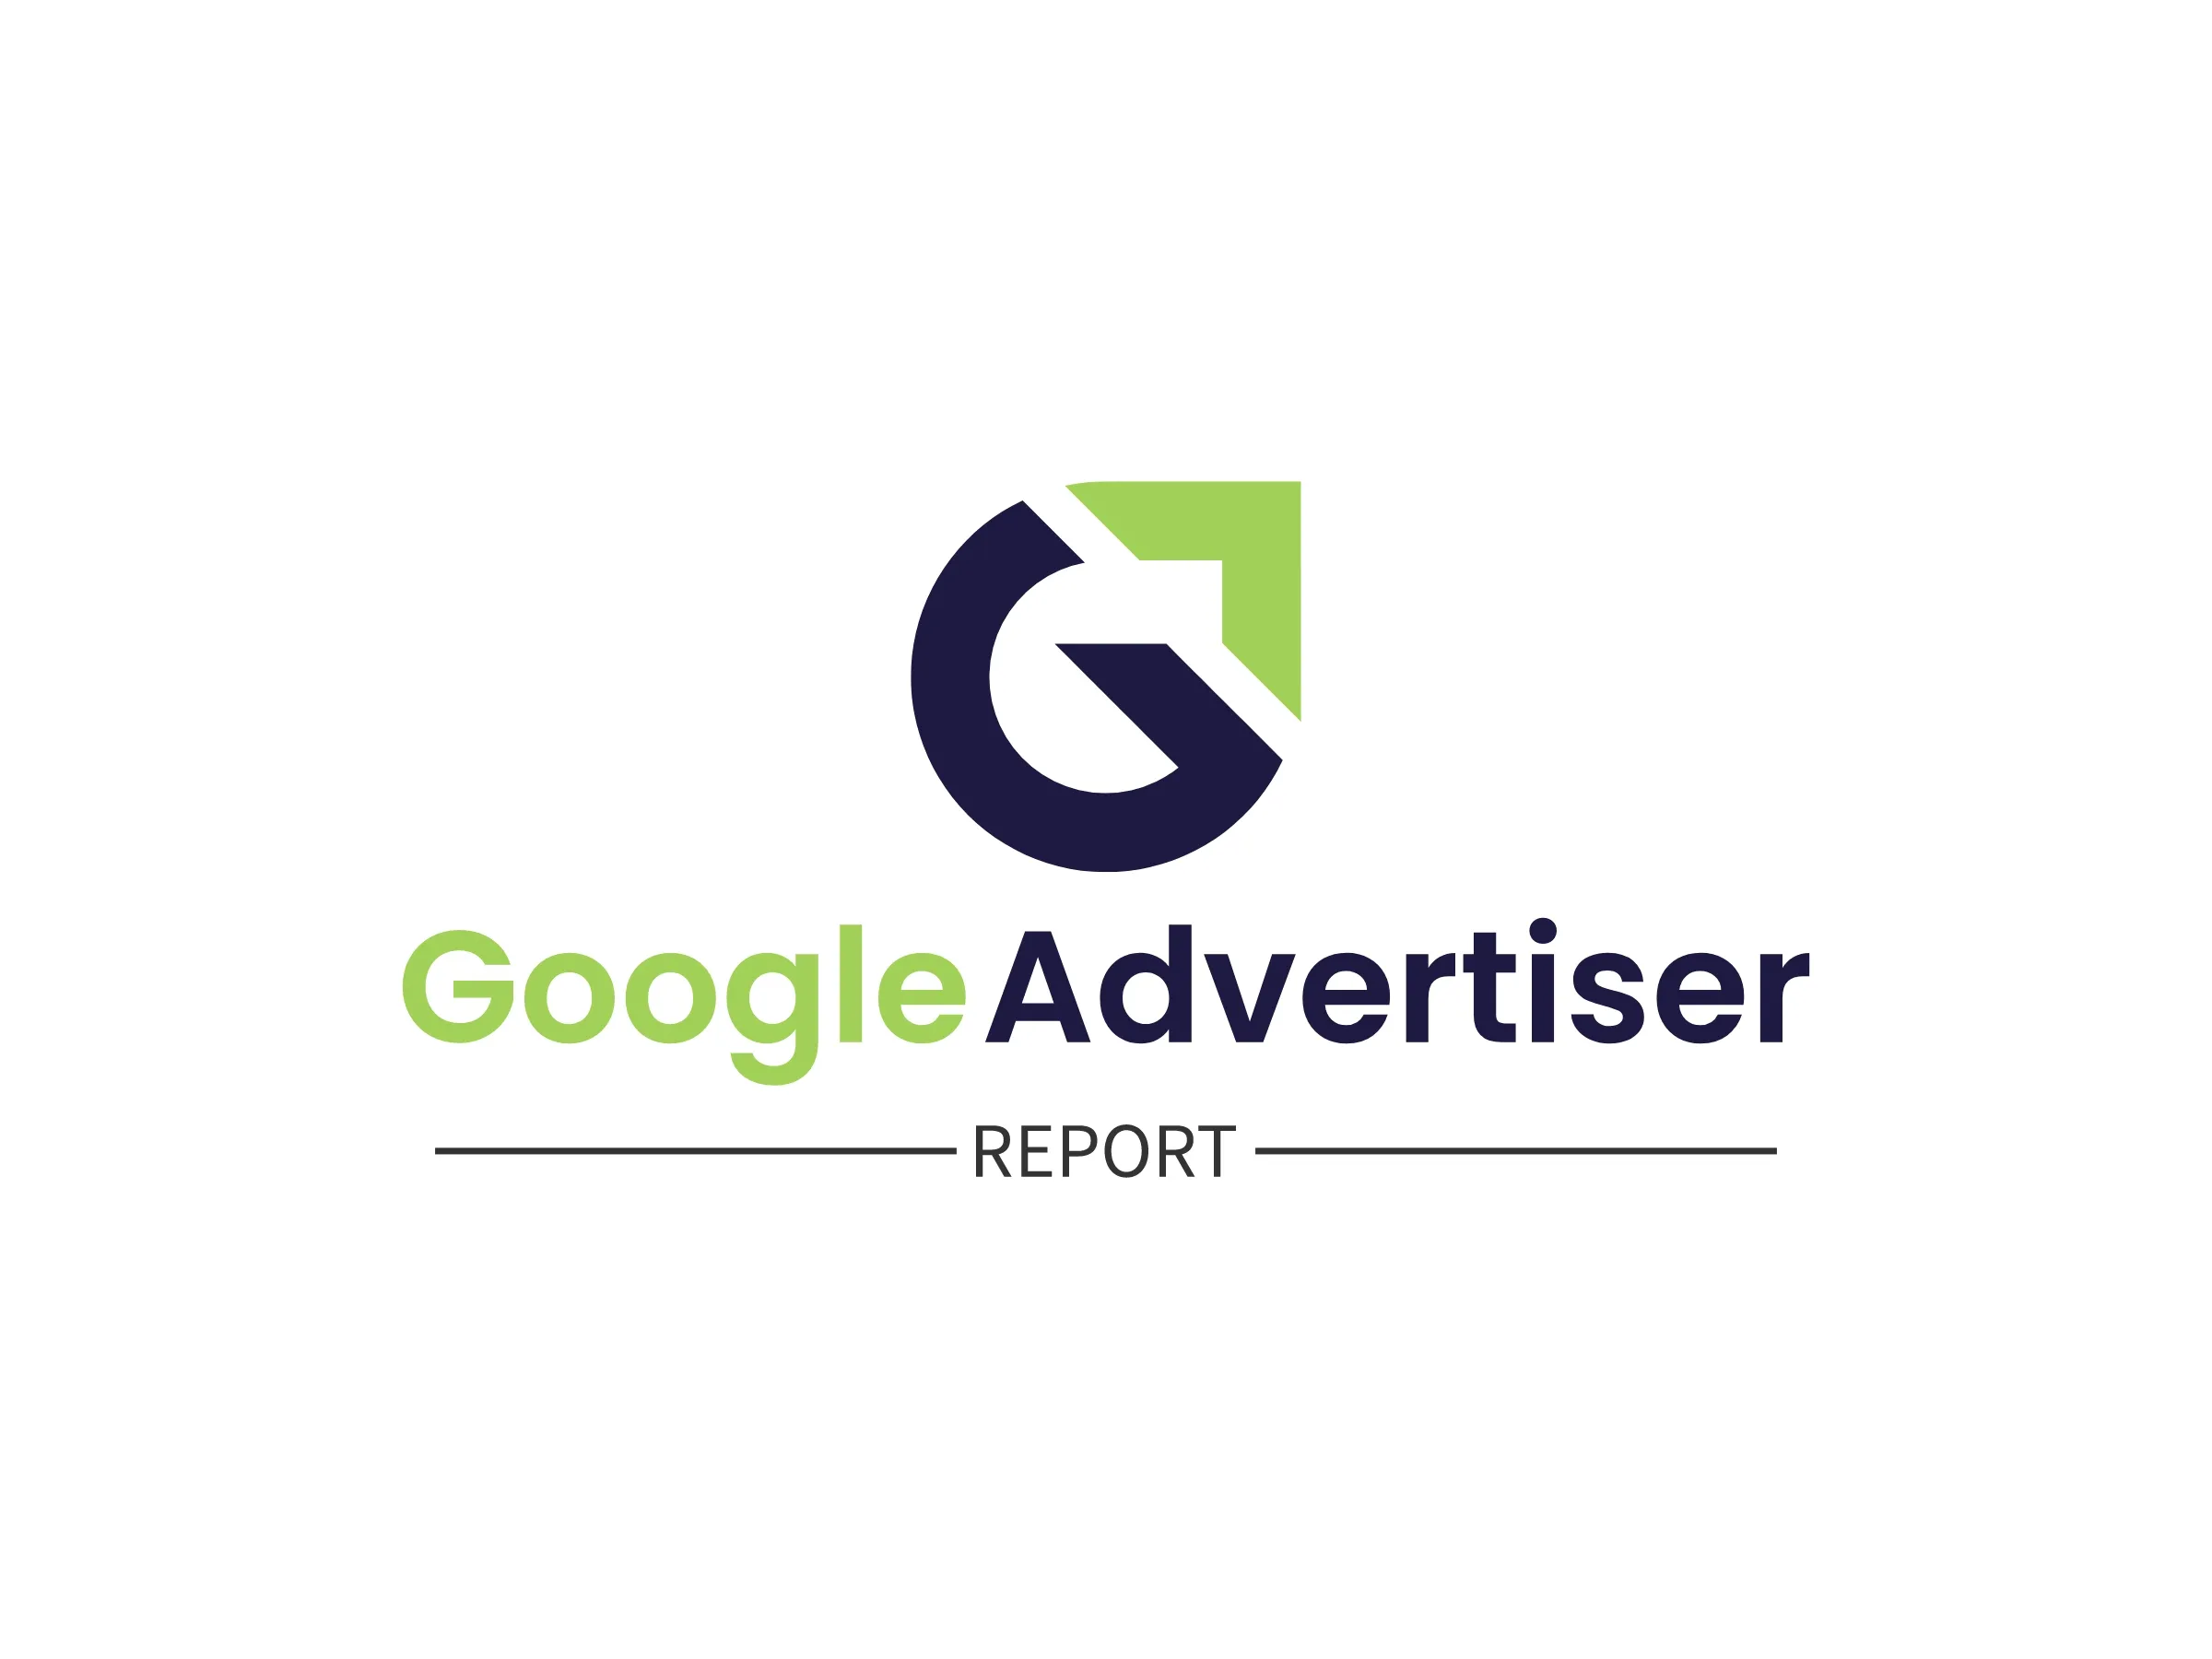 Google Advertiser Report Logo